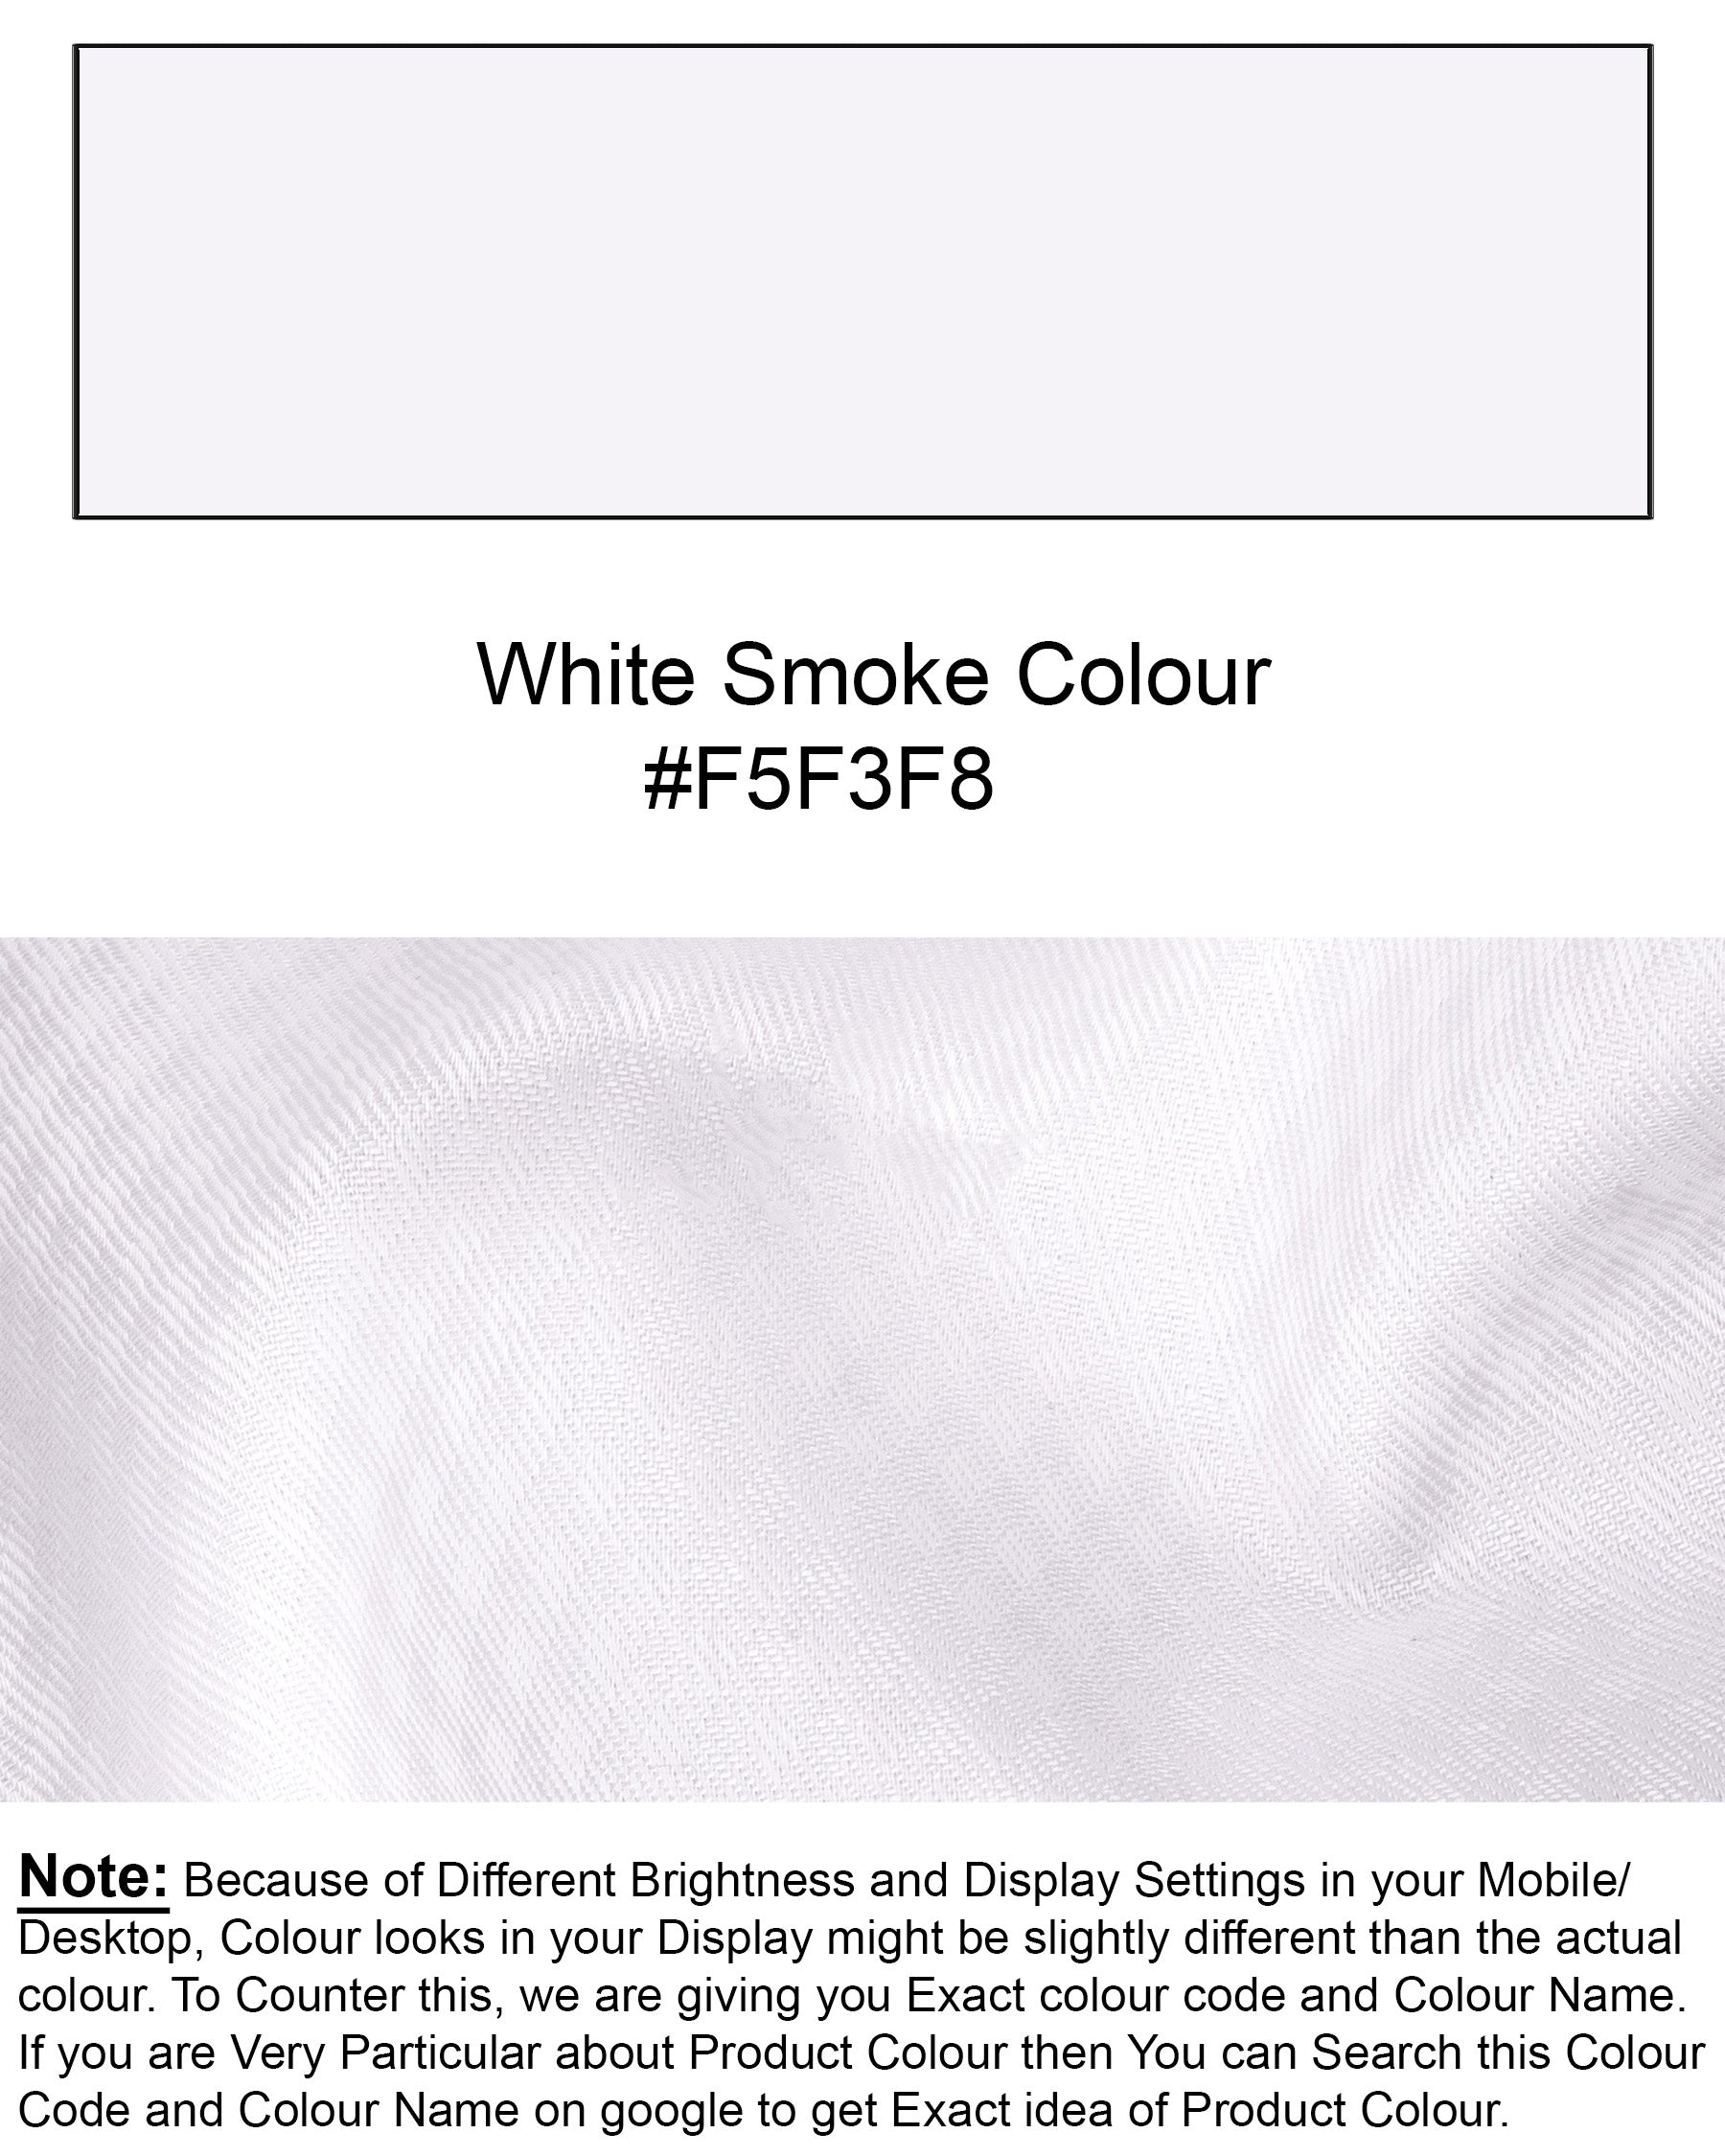 White Smoke Subtle Rhombus Printed Premium Cotton Shirt 6812-CA-38, 6812-CA-H-38, 6812-CA-39, 6812-CA-H-39, 6812-CA-40, 6812-CA-H-40, 6812-CA-42, 6812-CA-H-42, 6812-CA-44, 6812-CA-H-44, 6812-CA-46, 6812-CA-H-46, 6812-CA-48, 6812-CA-H-48, 6812-CA-50, 6812-CA-H-50, 6812-CA-52, 6812-CA-H-52